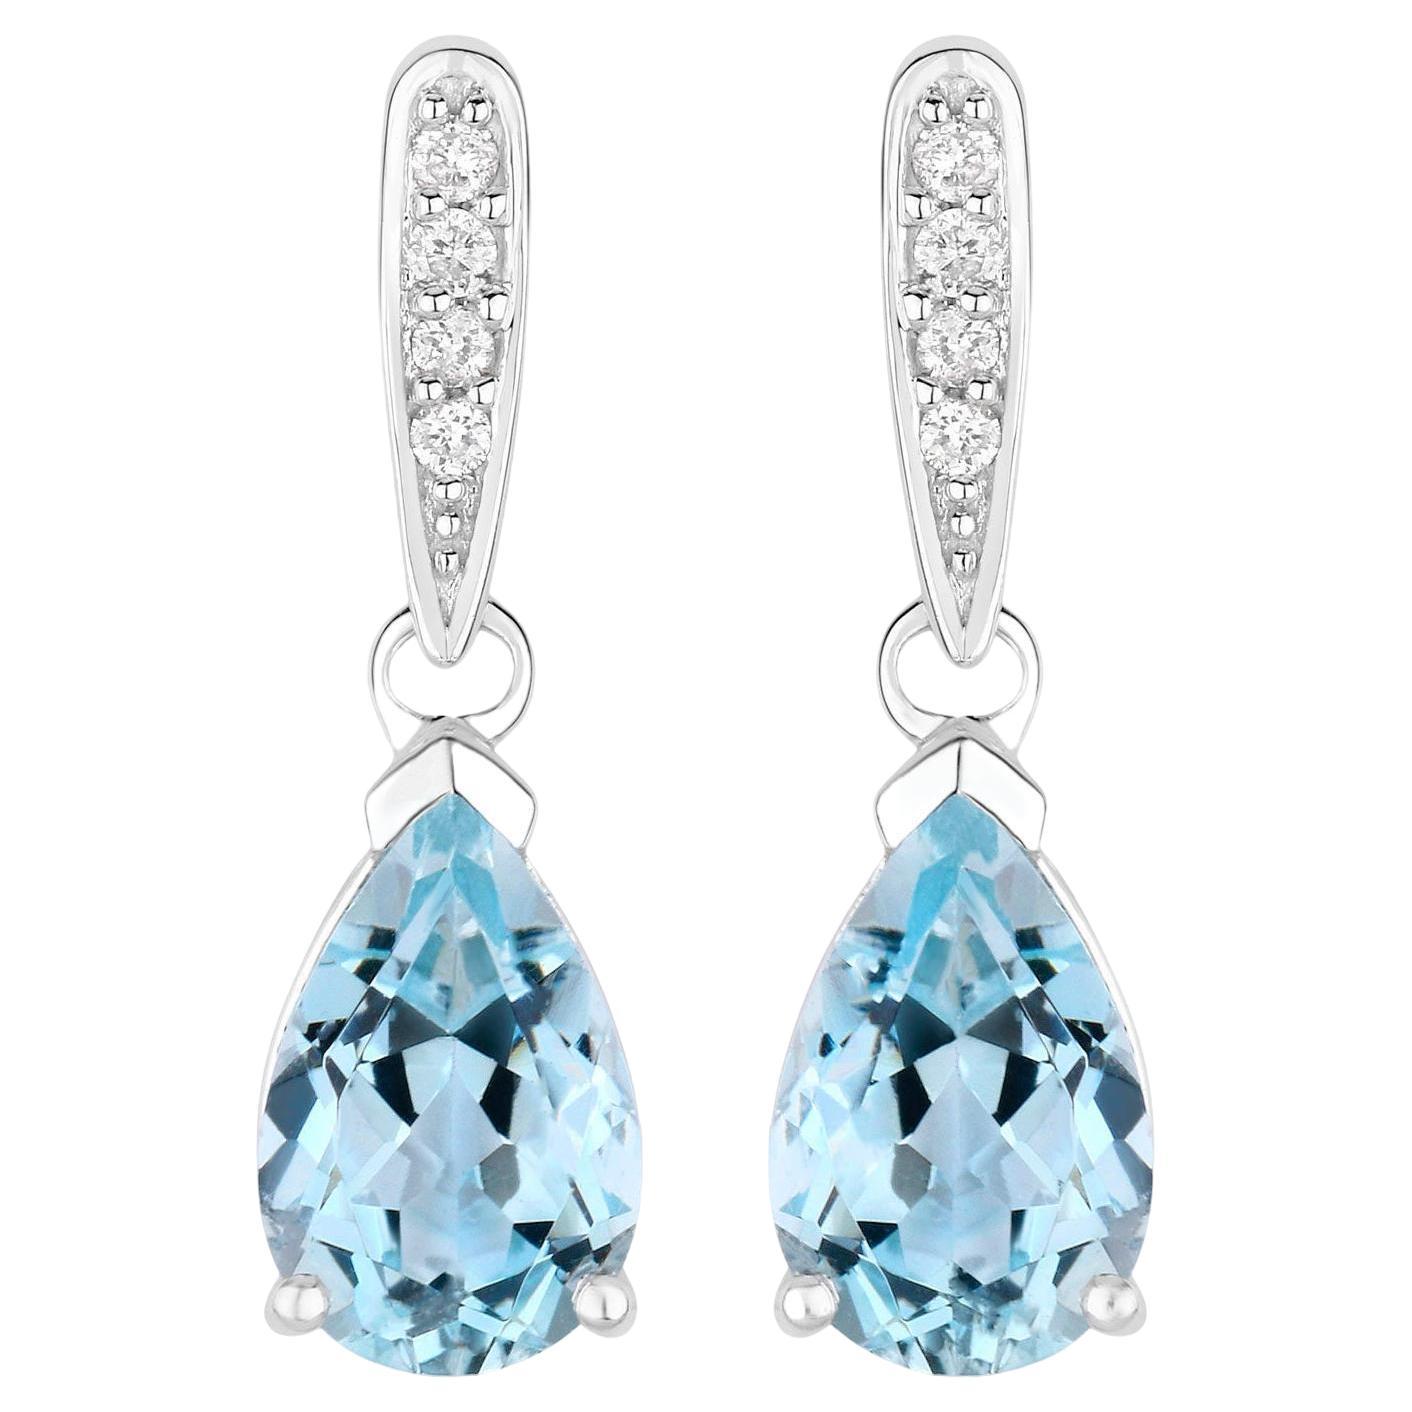 Aquamarine Dangle Earrings With Diamonds 1.97 Carats 10K White Gold